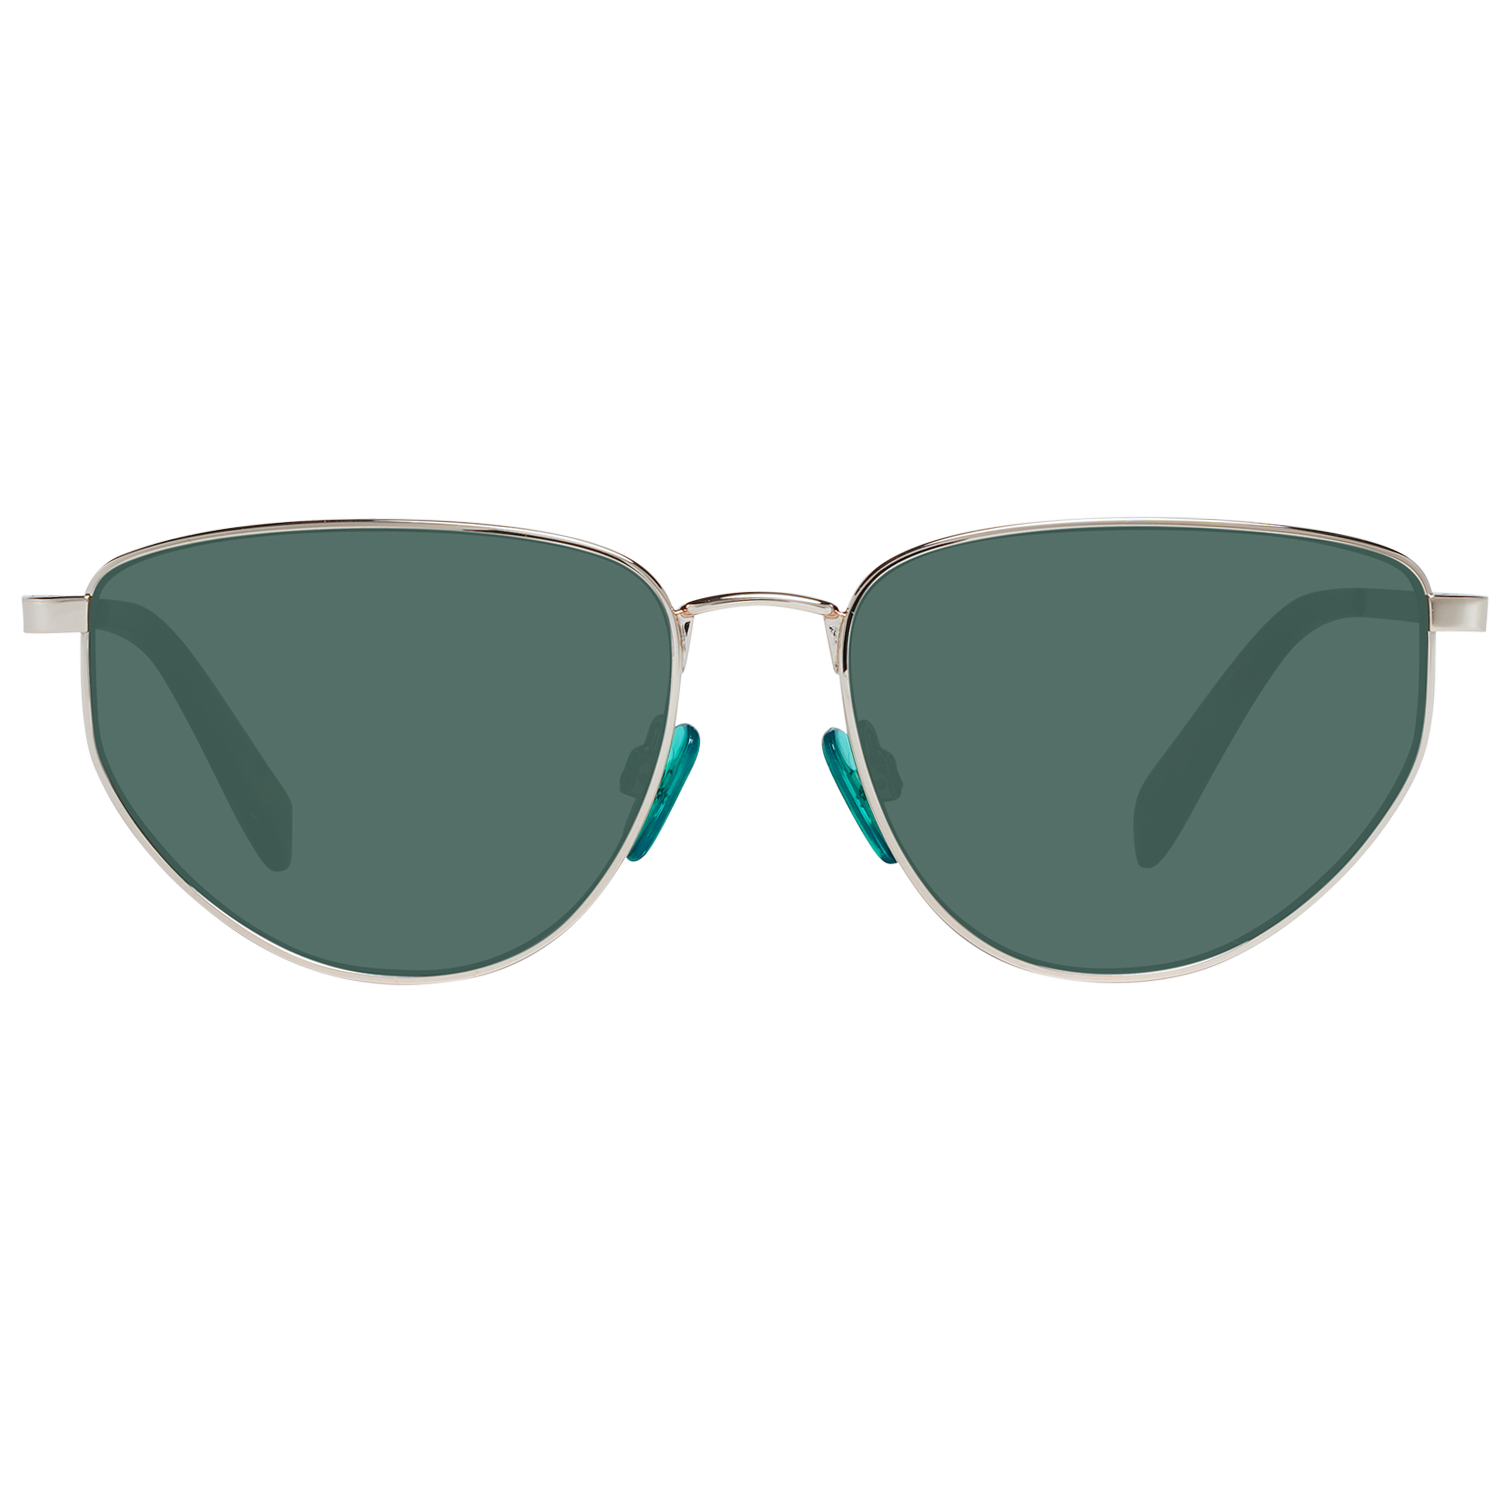 Benetton Sunglasses Benetton Sunglasses BE7033 402 56 Eyeglasses Eyewear UK USA Australia 